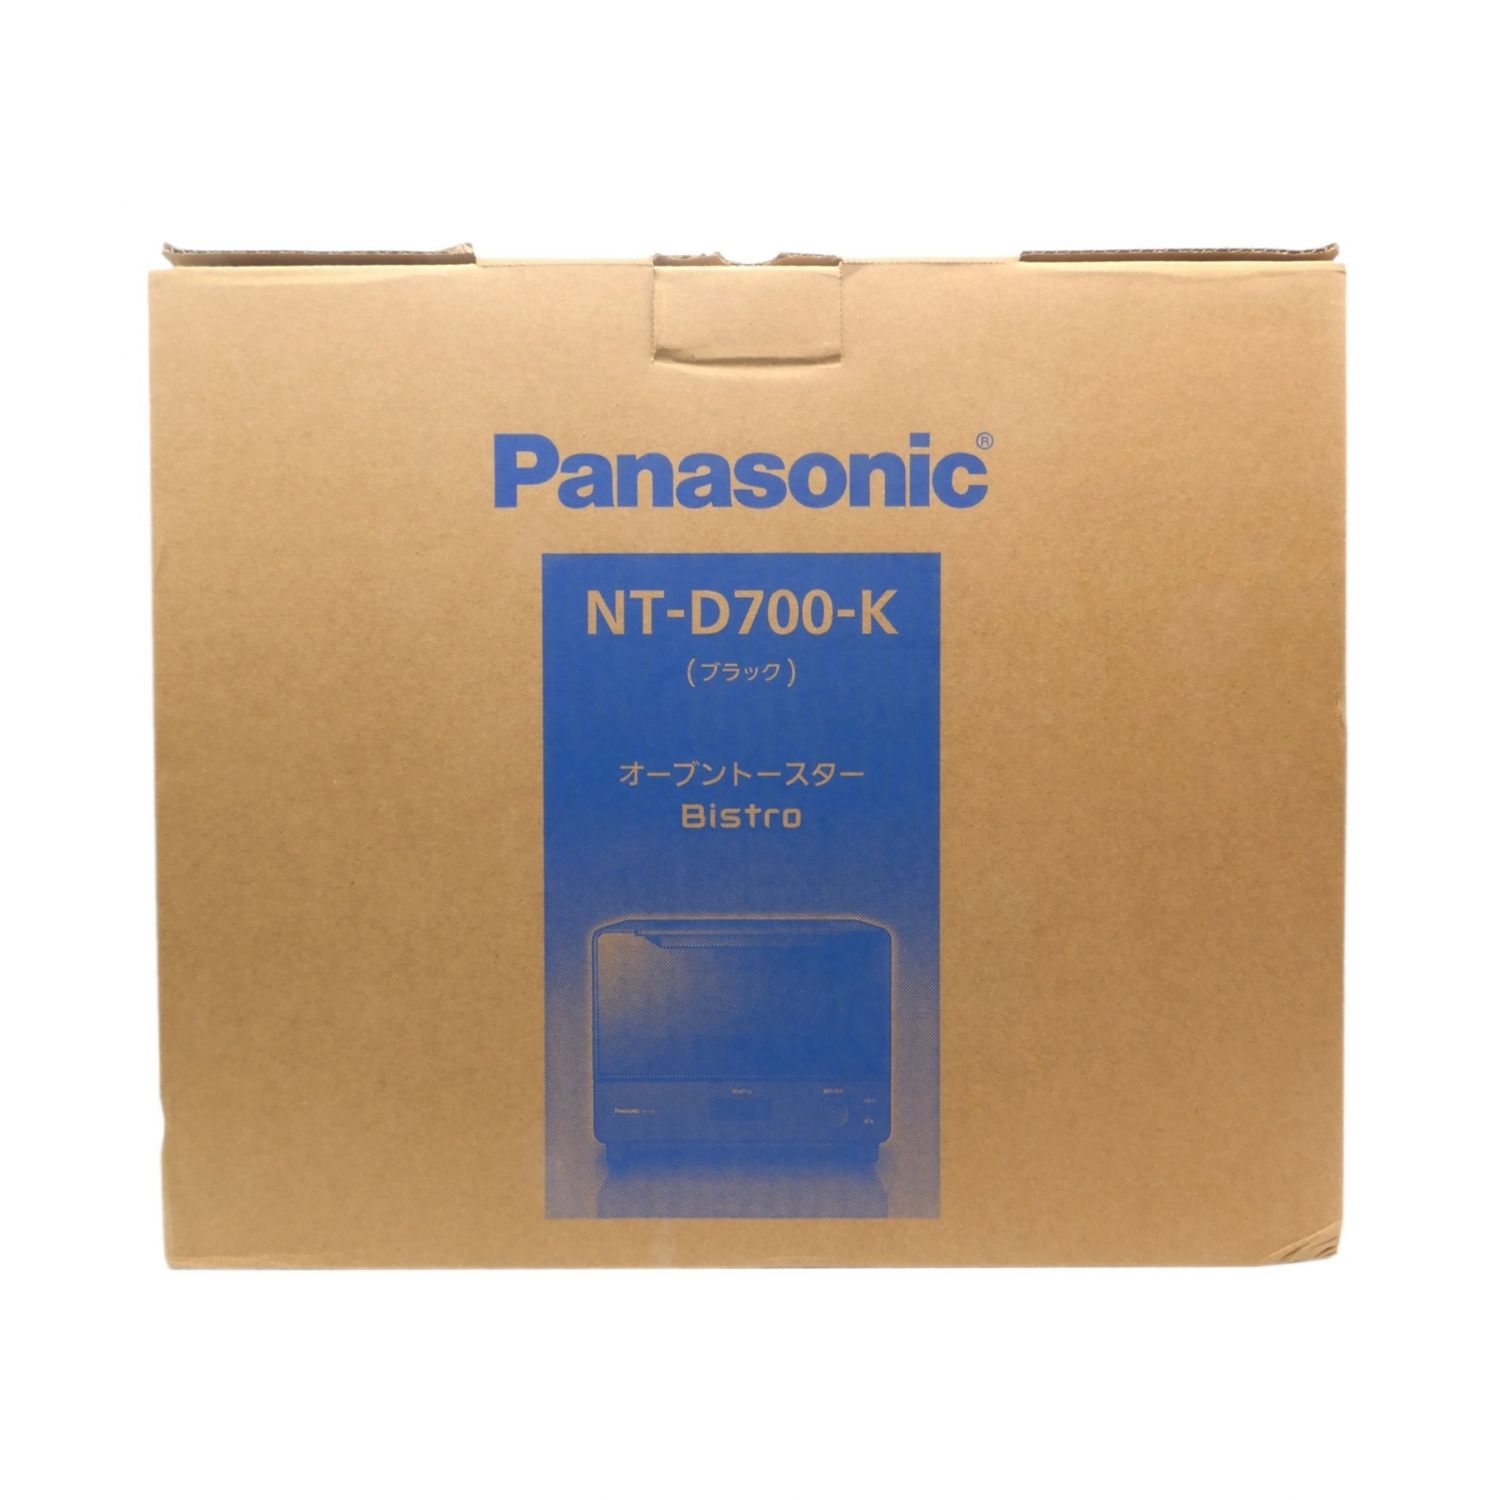 Panasonic (パナソニック) オーブントースター Bistro NT-D700-K